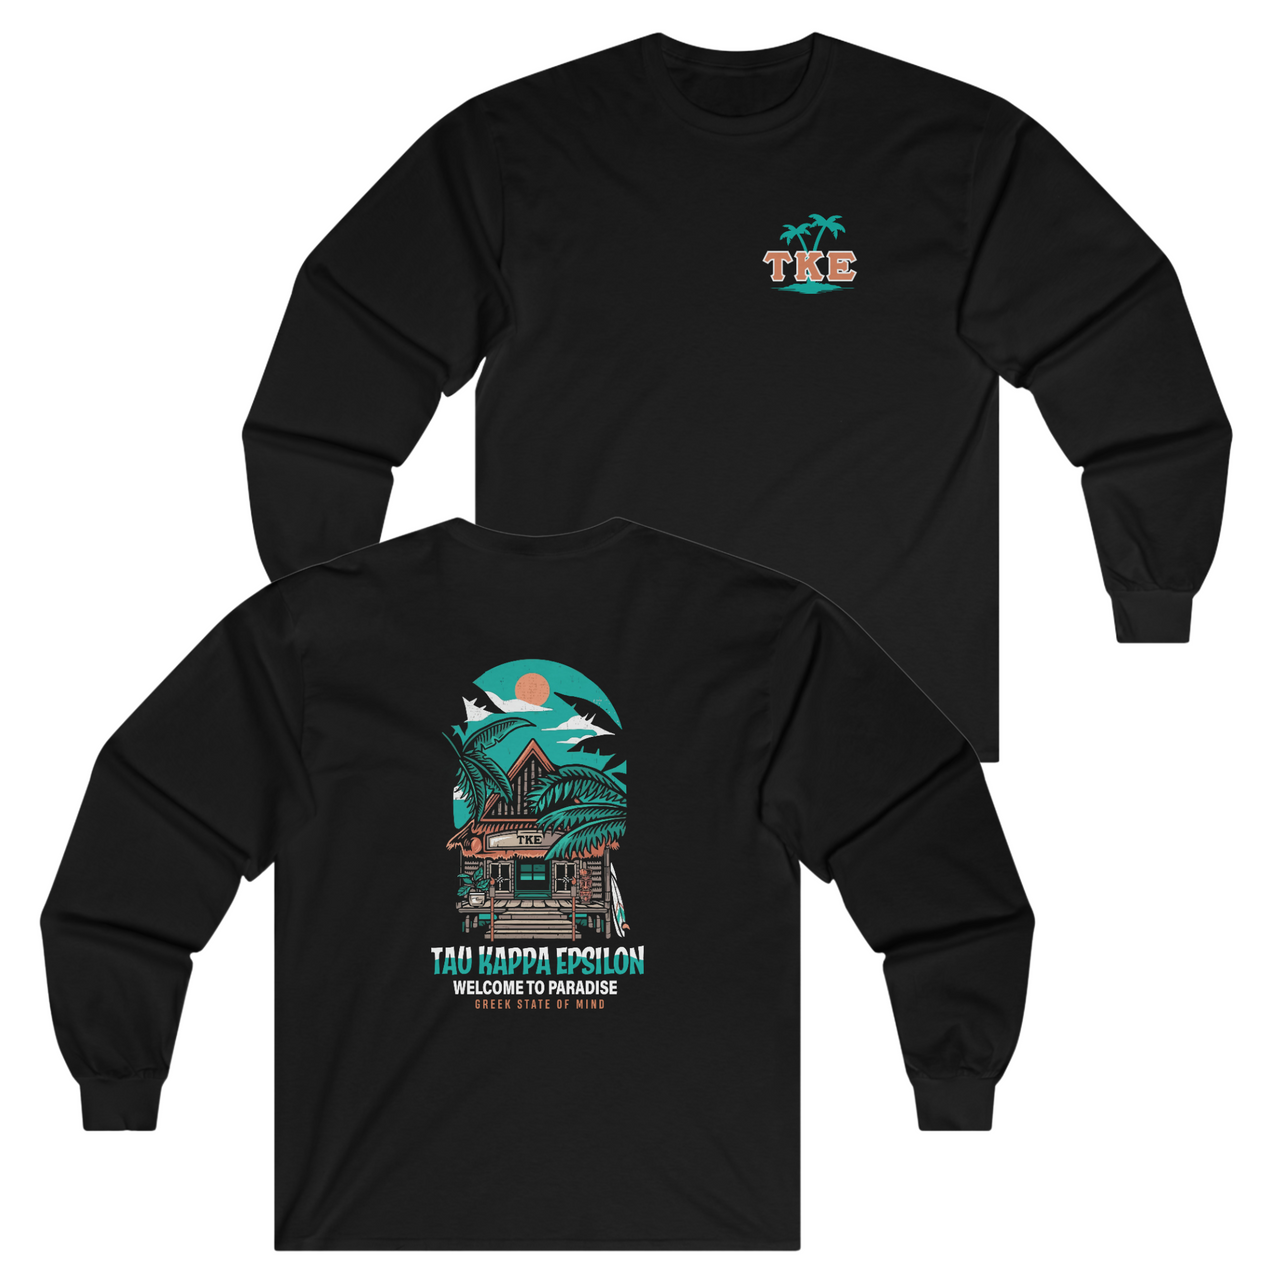 Black Tau Kappa Epsilon Graphic Long Sleeve T-Shirt | Welcome to Paradise | Tau Kappa Epsilon Fraternity